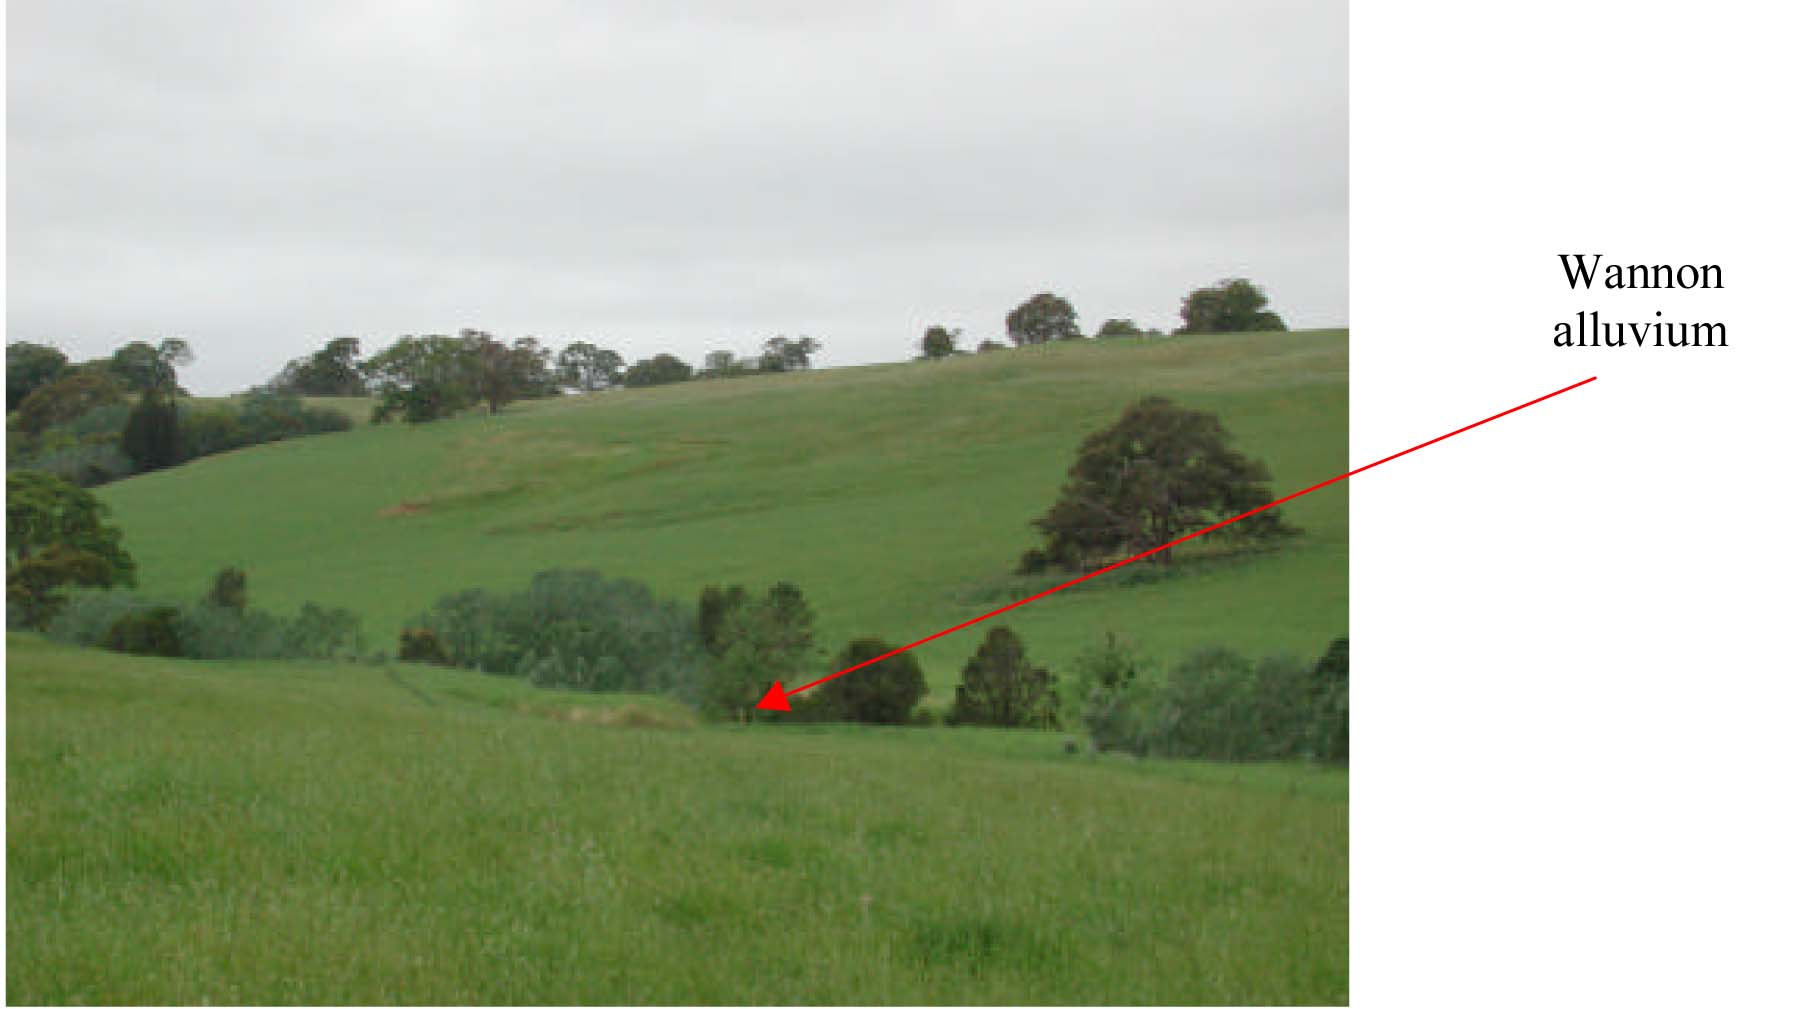 Glenelg Land Resource Assessment - Land Unit System - Wannon alluvial